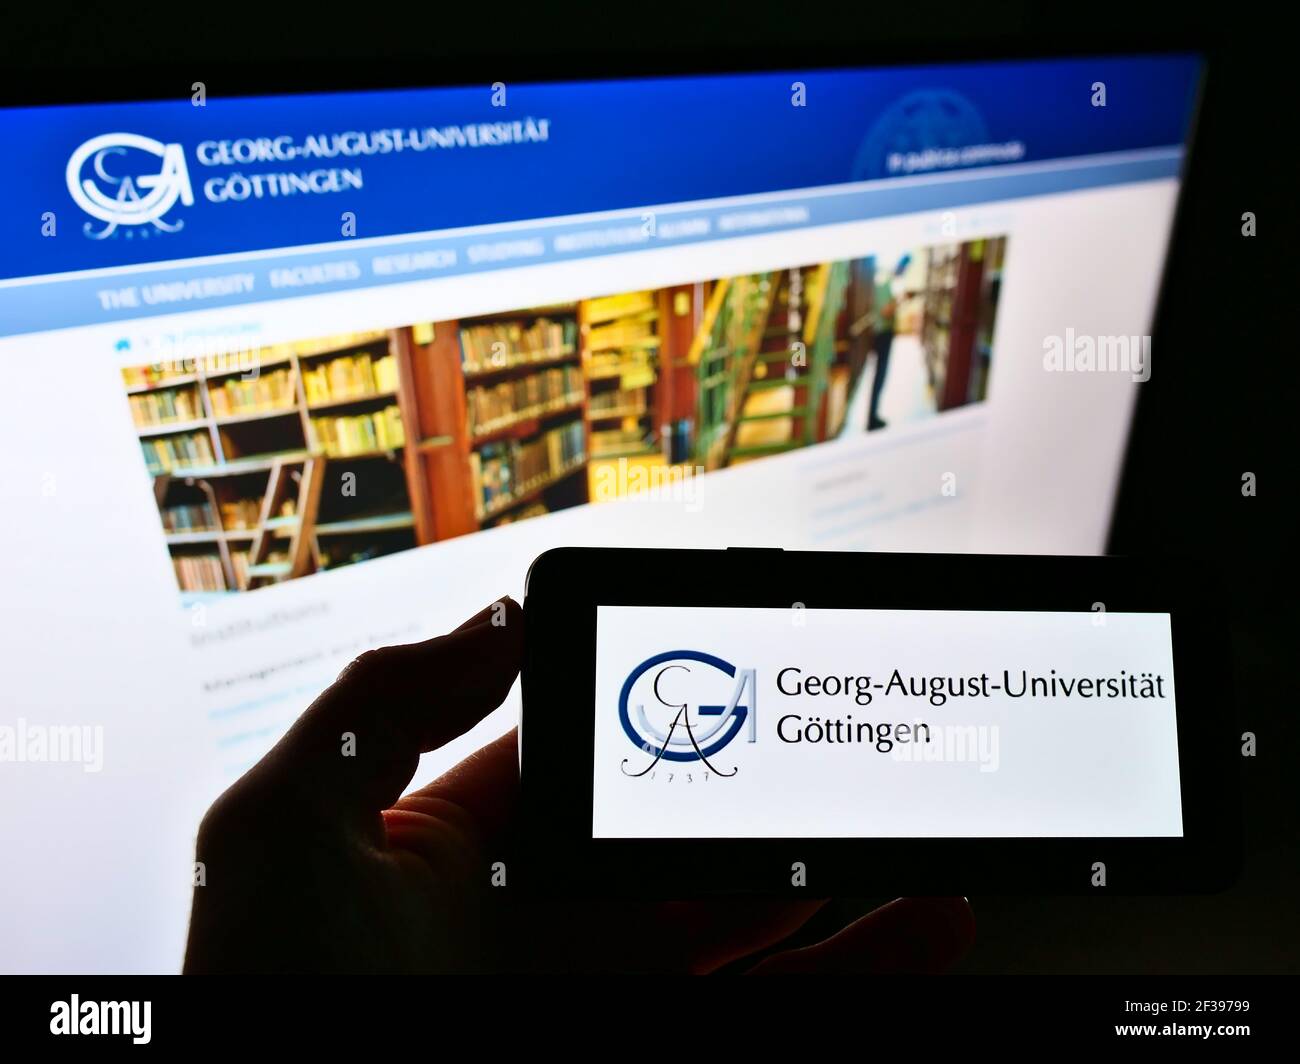 Person holding smartphone with logo of German university Georg-August-Universität Göttingen on screen in front of website. Focus on phone display. Stock Photo